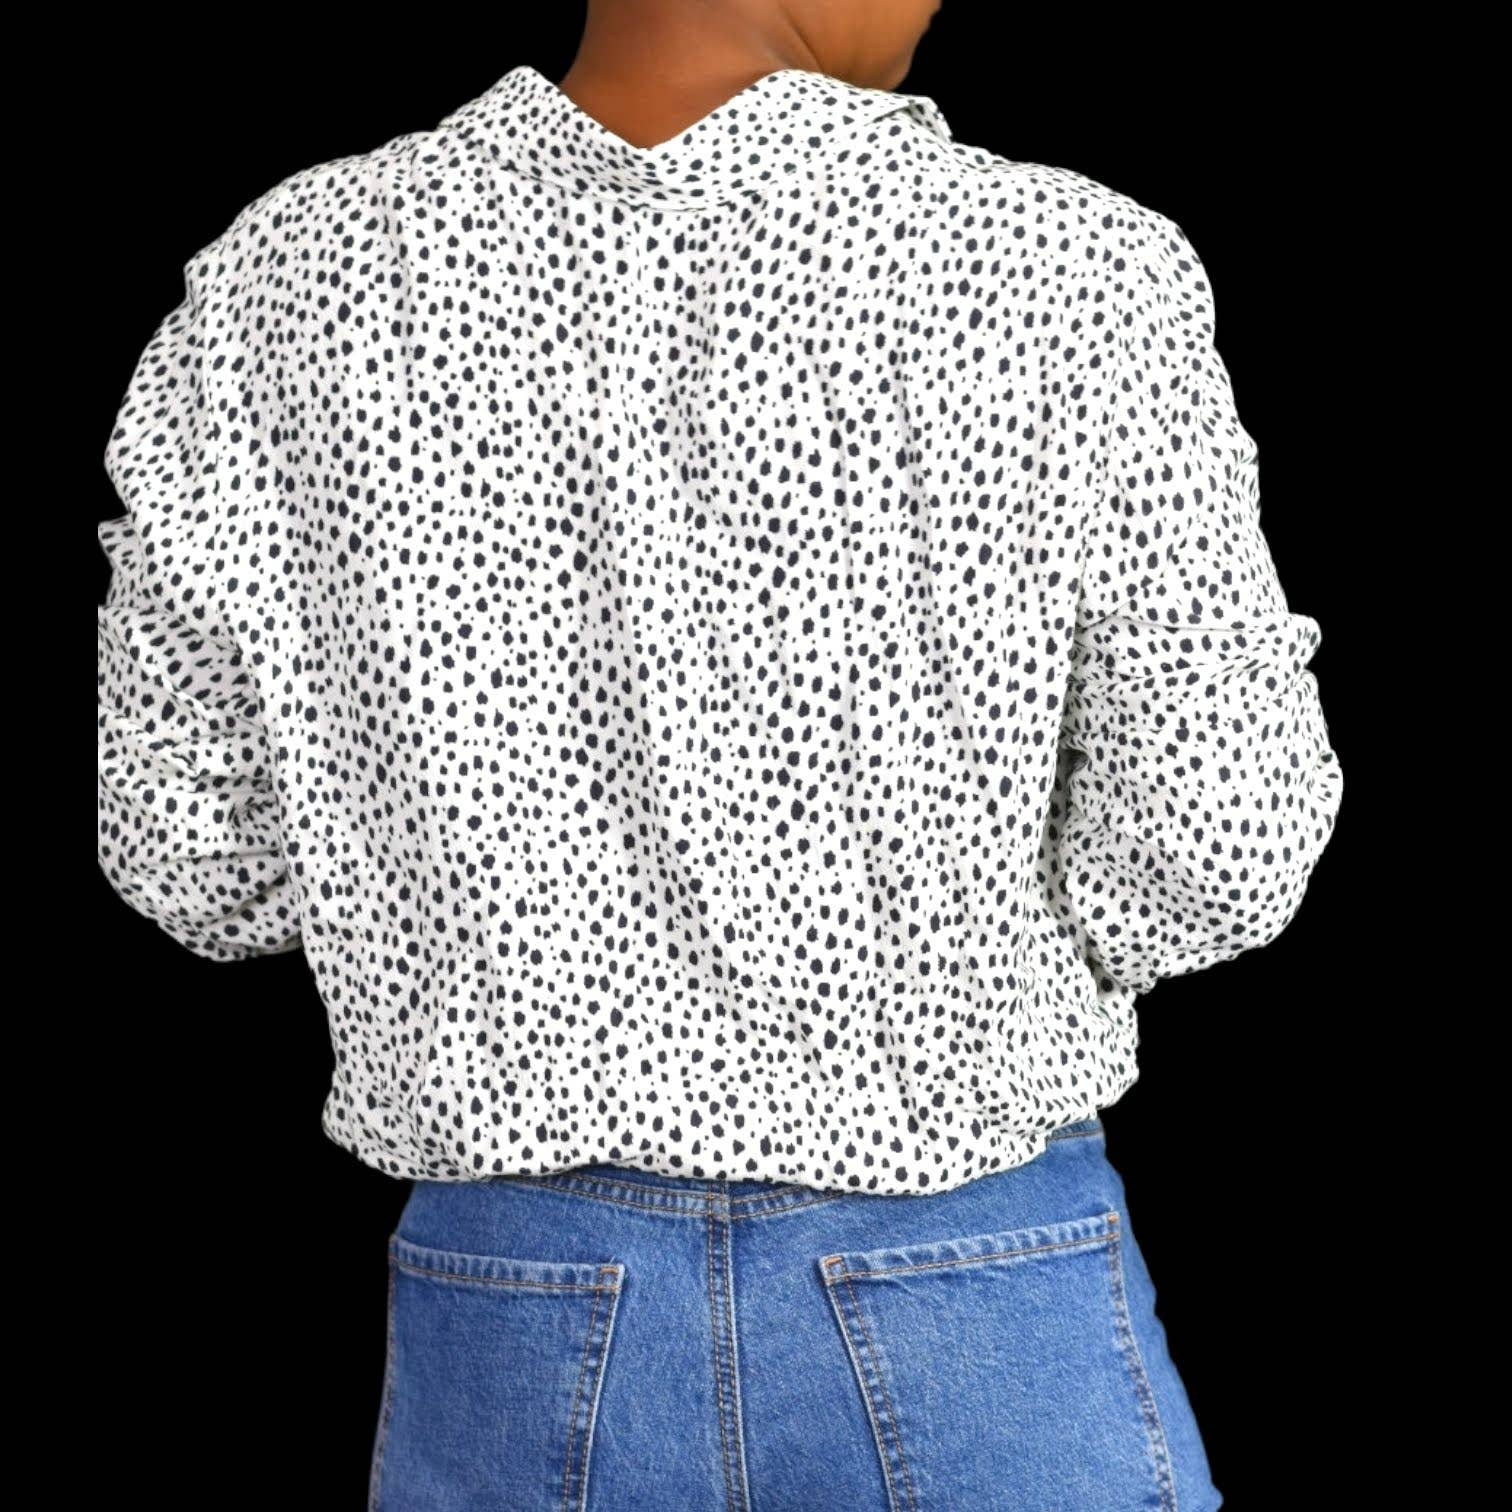 Emerson Fry Ribbons Blouse Black White Cheetah Animal Print Shirt Size Large